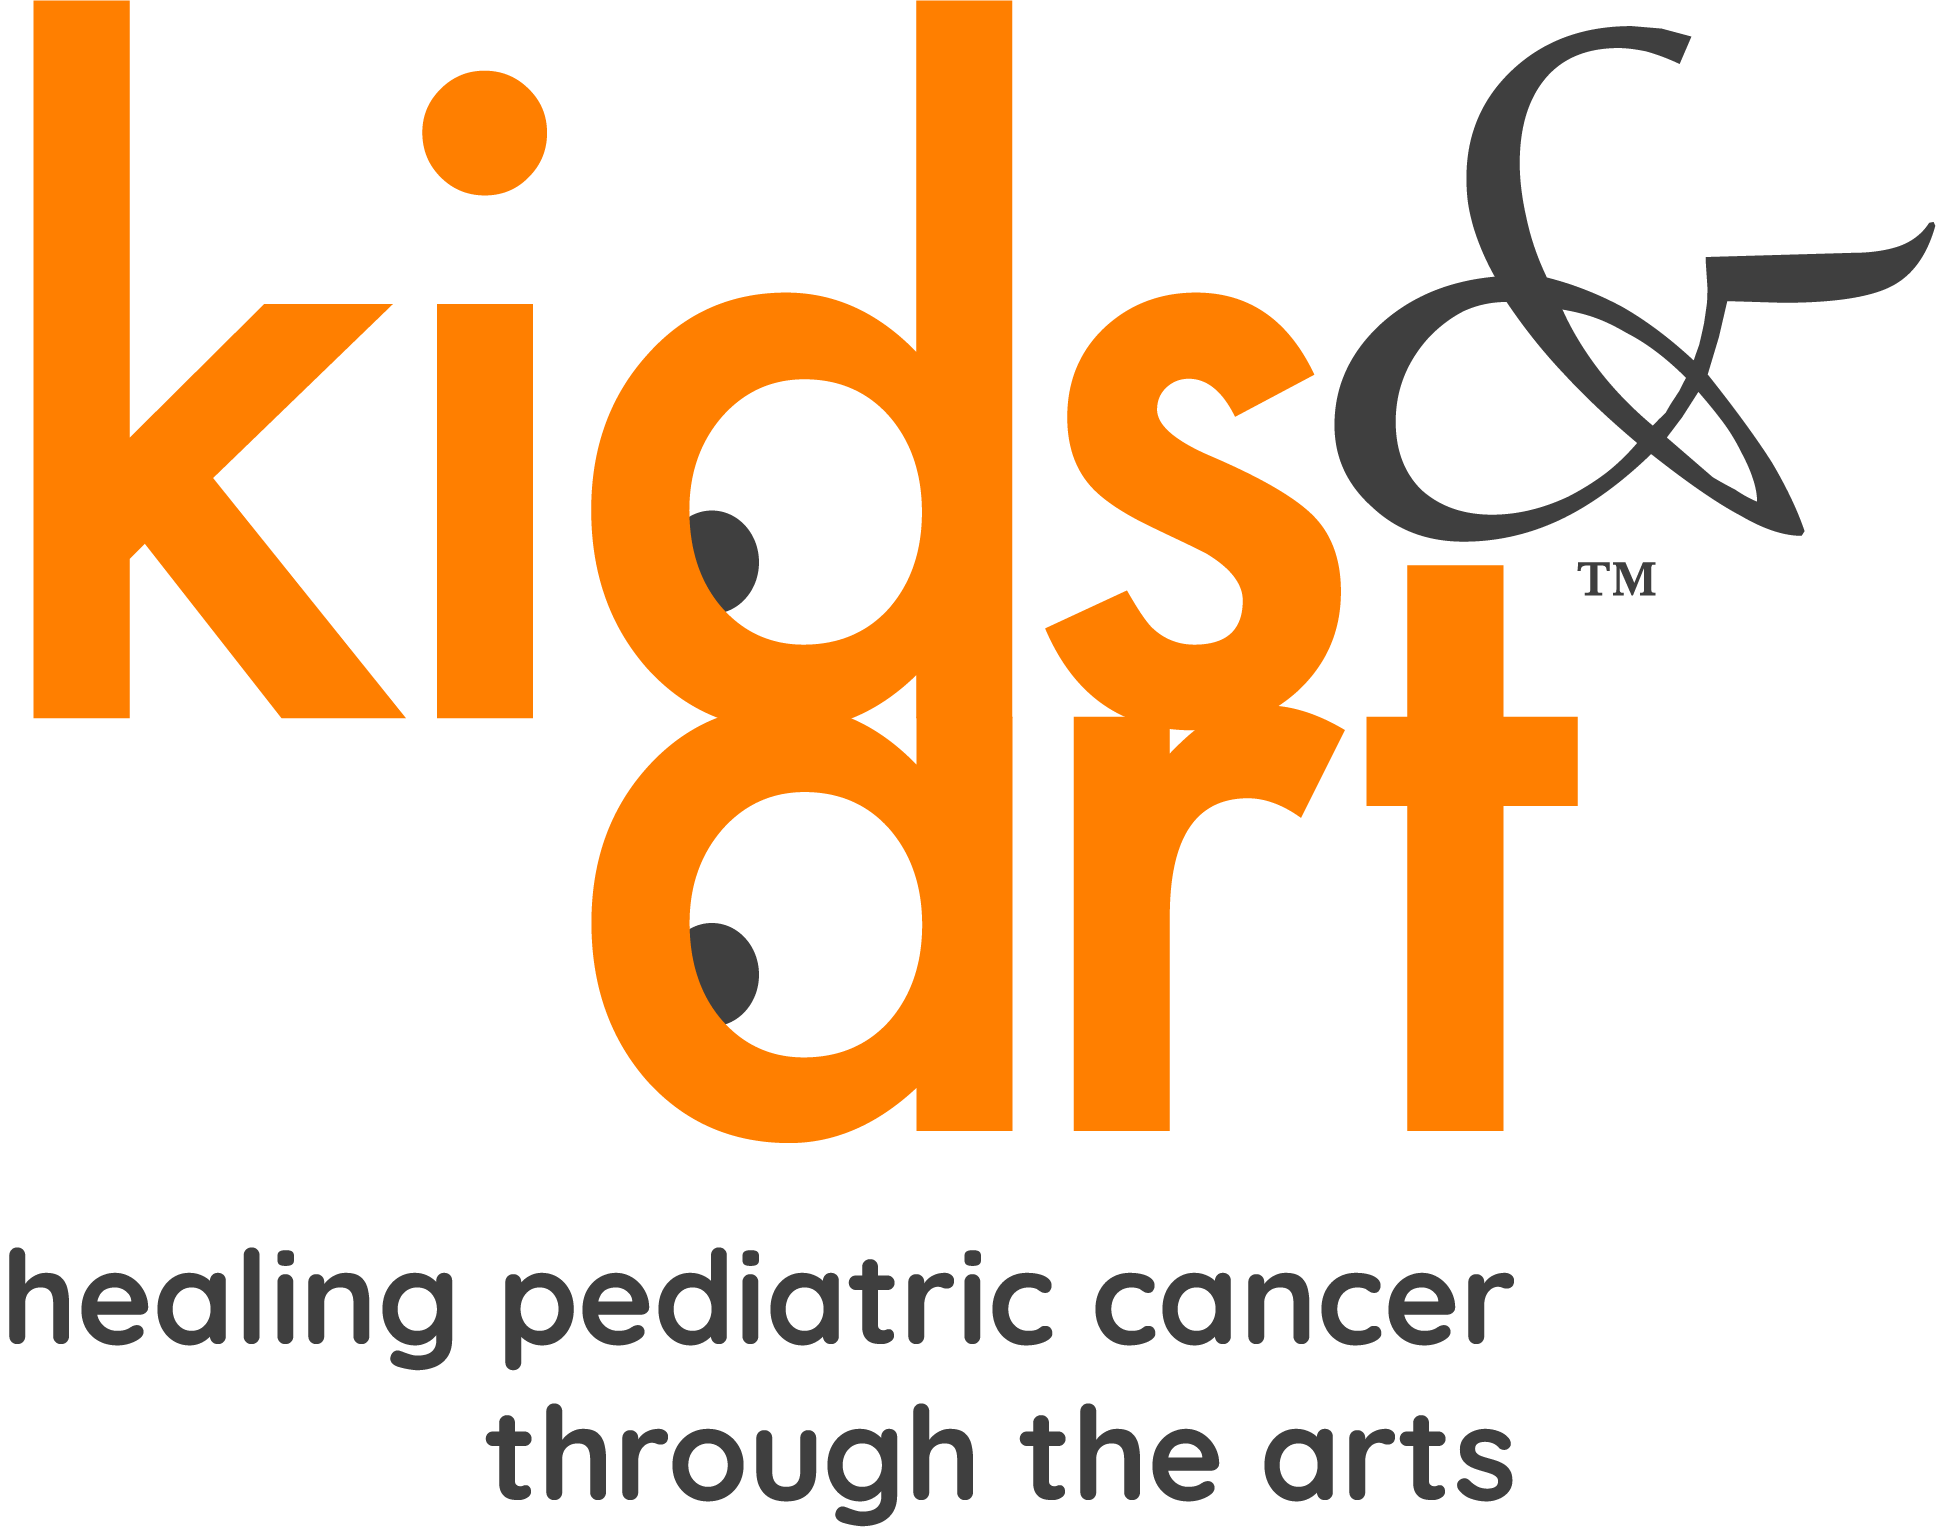 Kids & Art Foundation